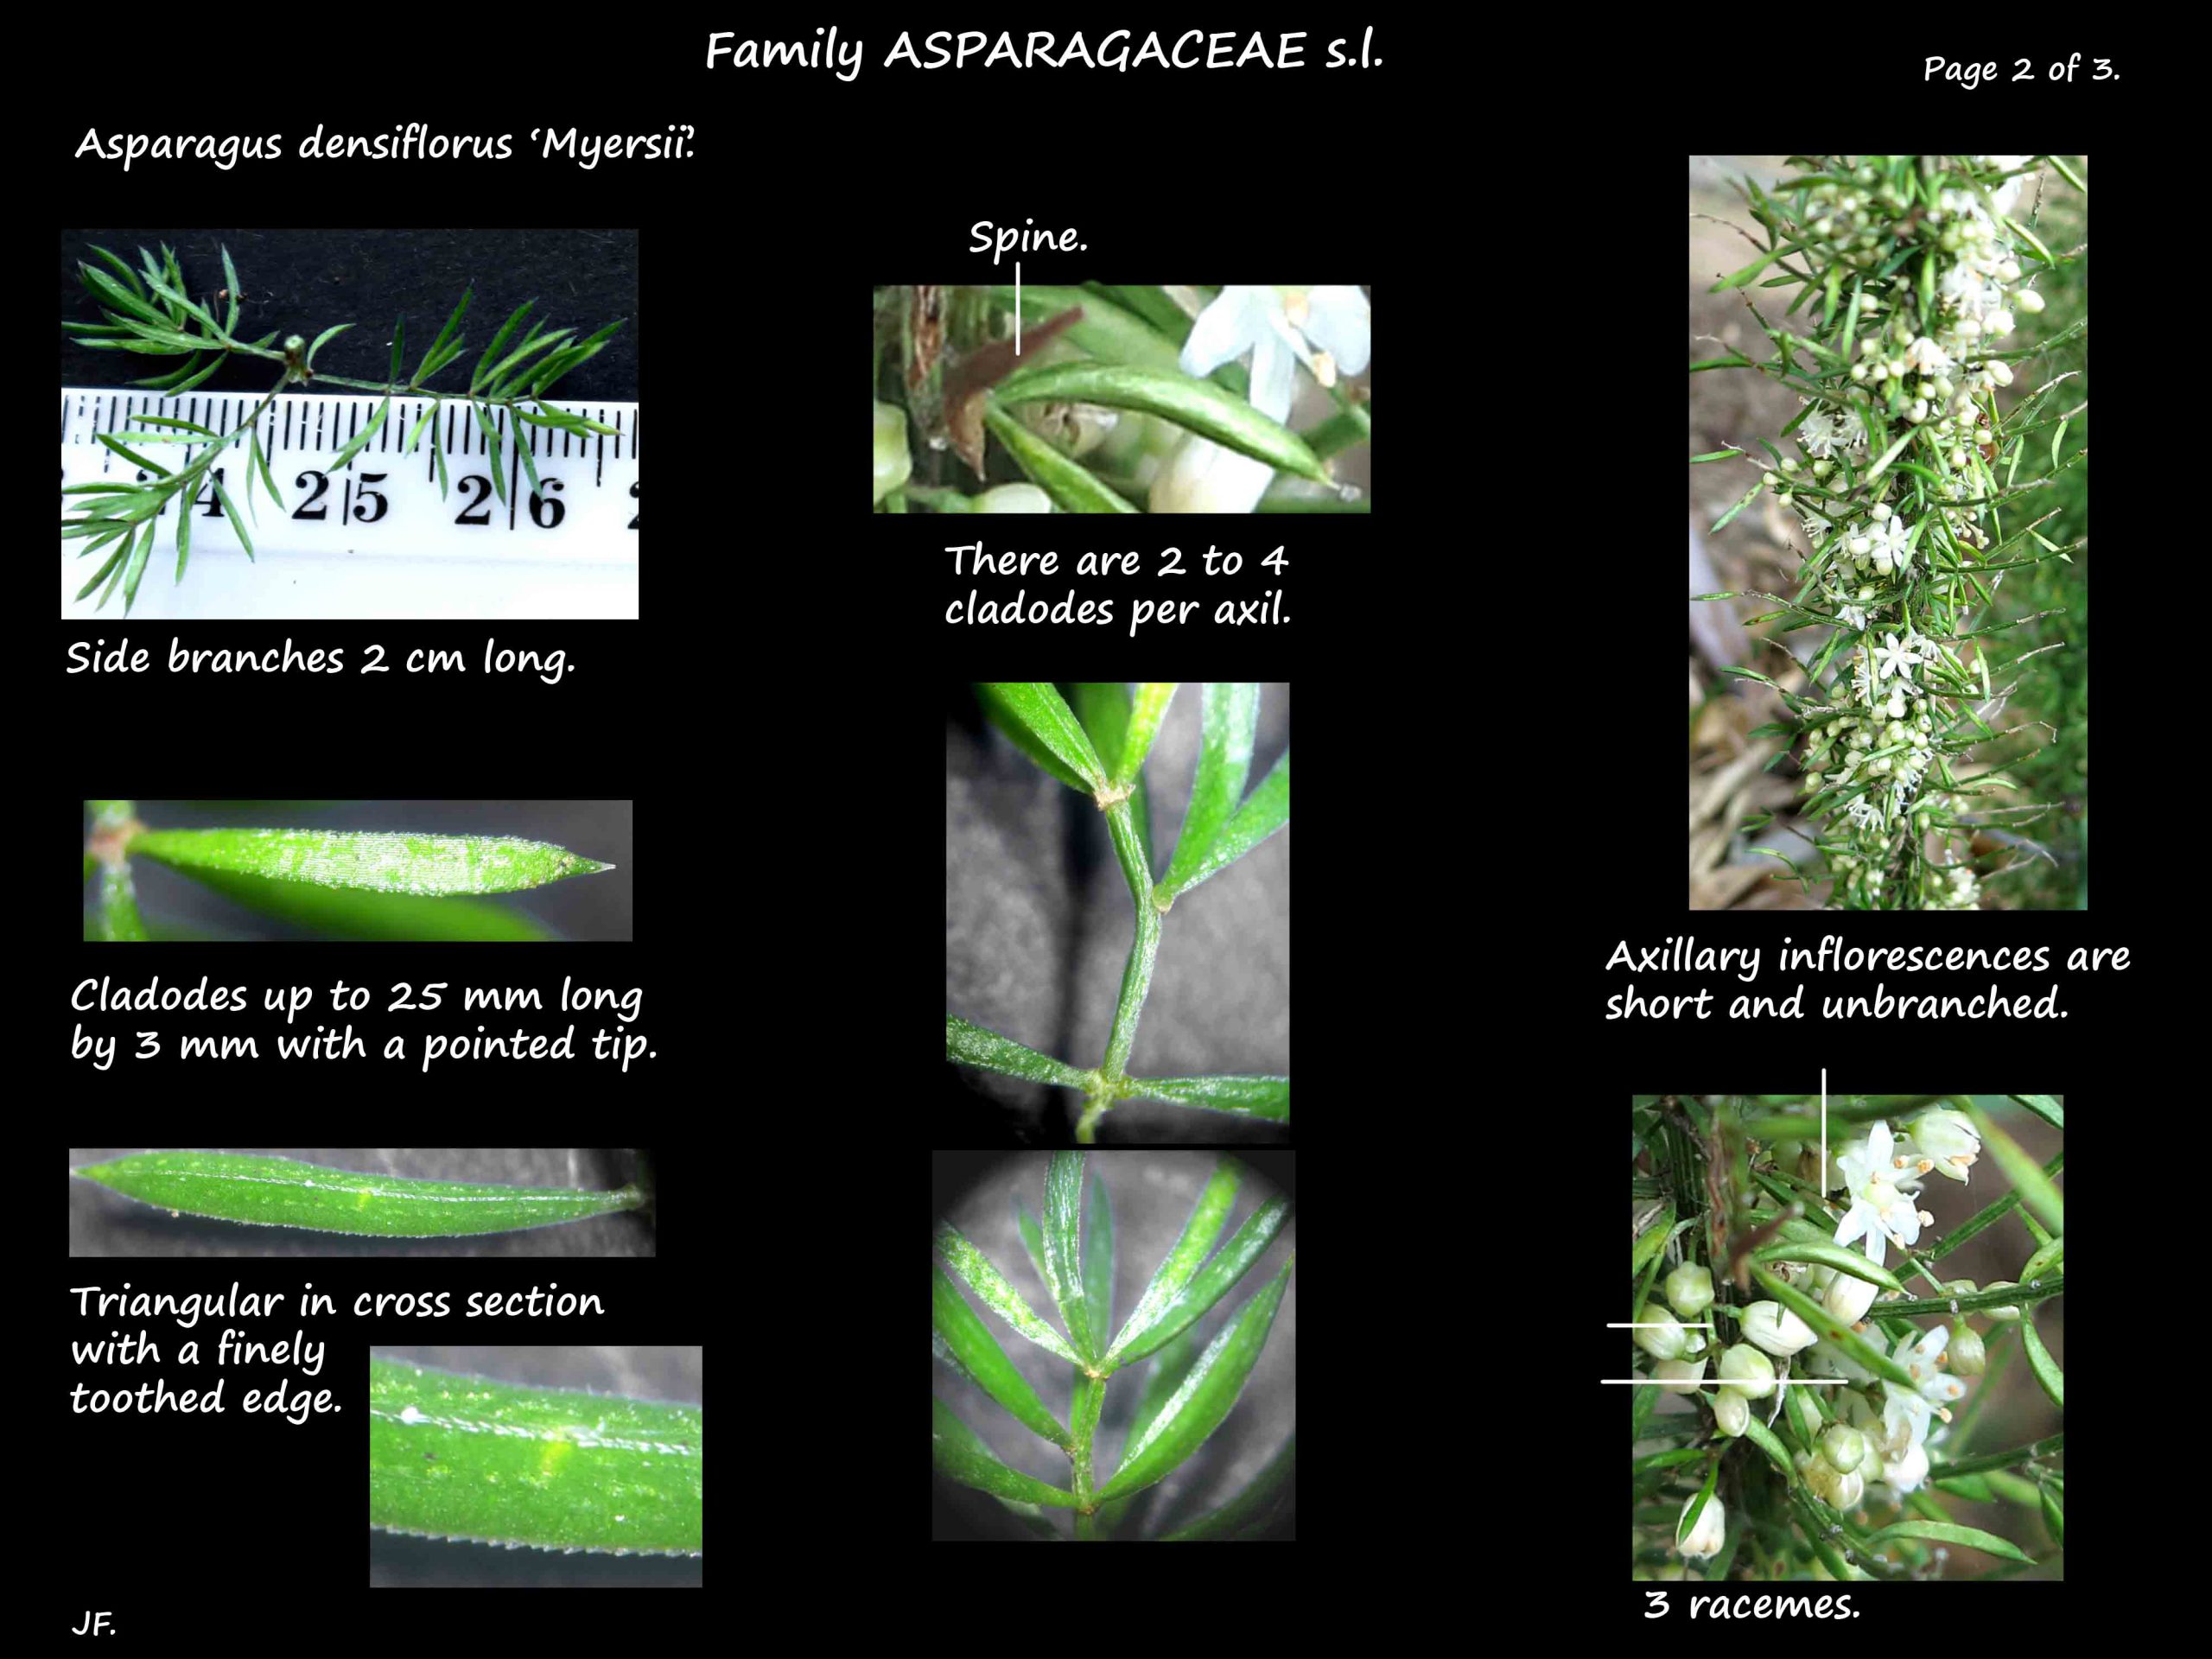 2 Asparagus densiflorus leaves